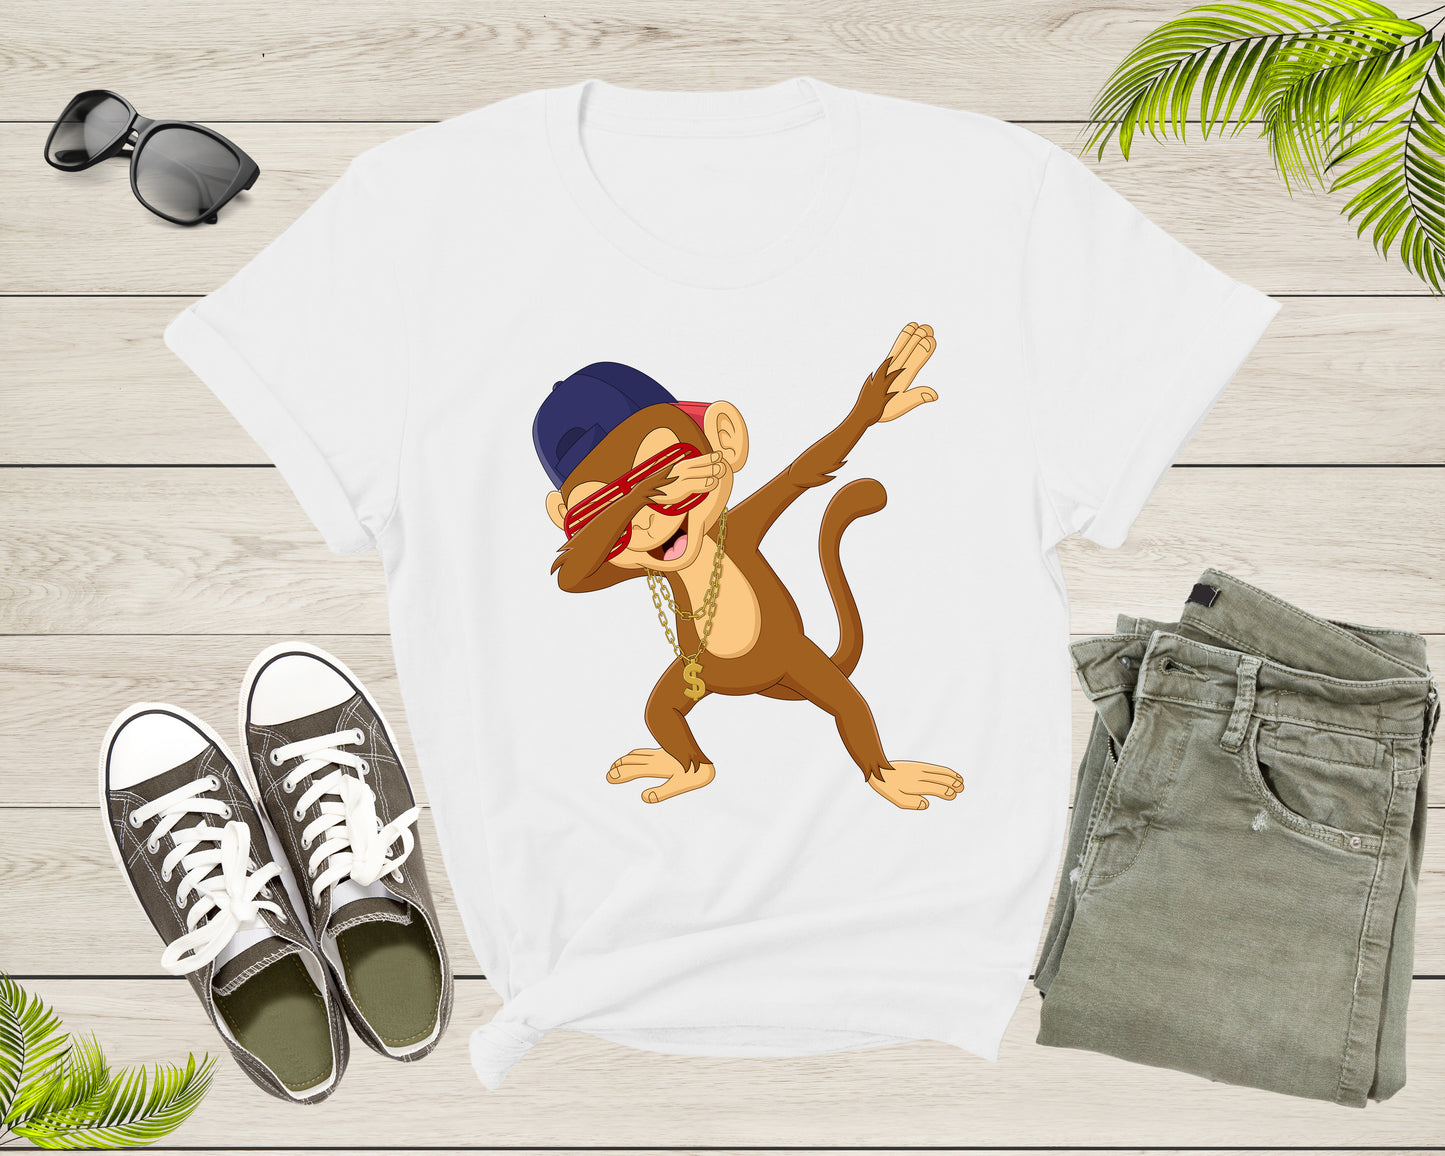 Cool Dabbing Dancing Monkey Wearing Sunglasses Hat Necklace T-Shirt Monkey Shirt for Men Women Kids Boys Girls Teens Graphic Gift Tshirt